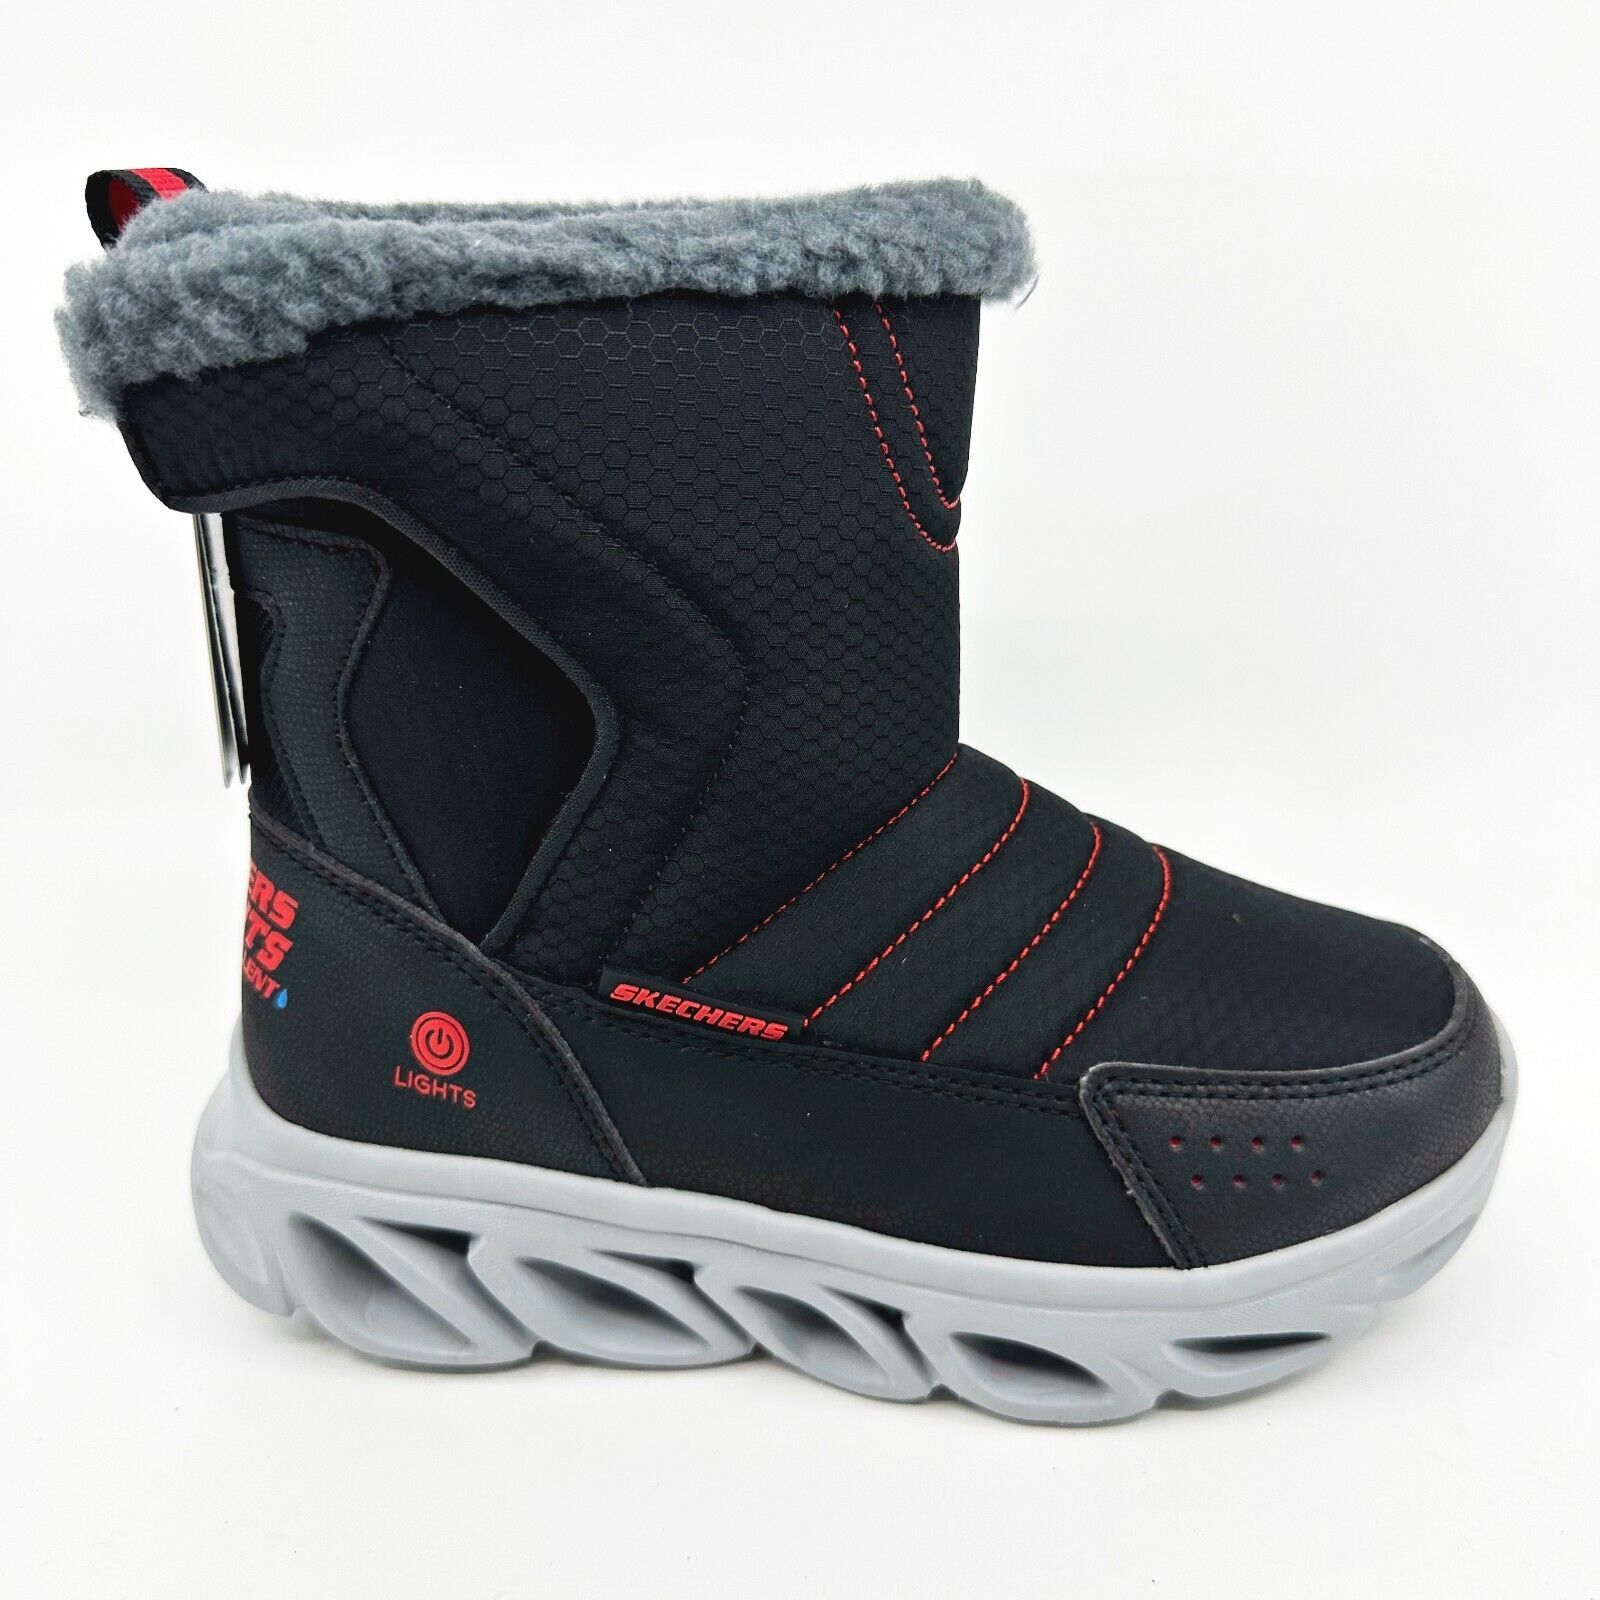 Skechers S Lights Hypno Flash 3.0 Fast Breeze Black Kids Boys Size 12.5 Boots - $47.95